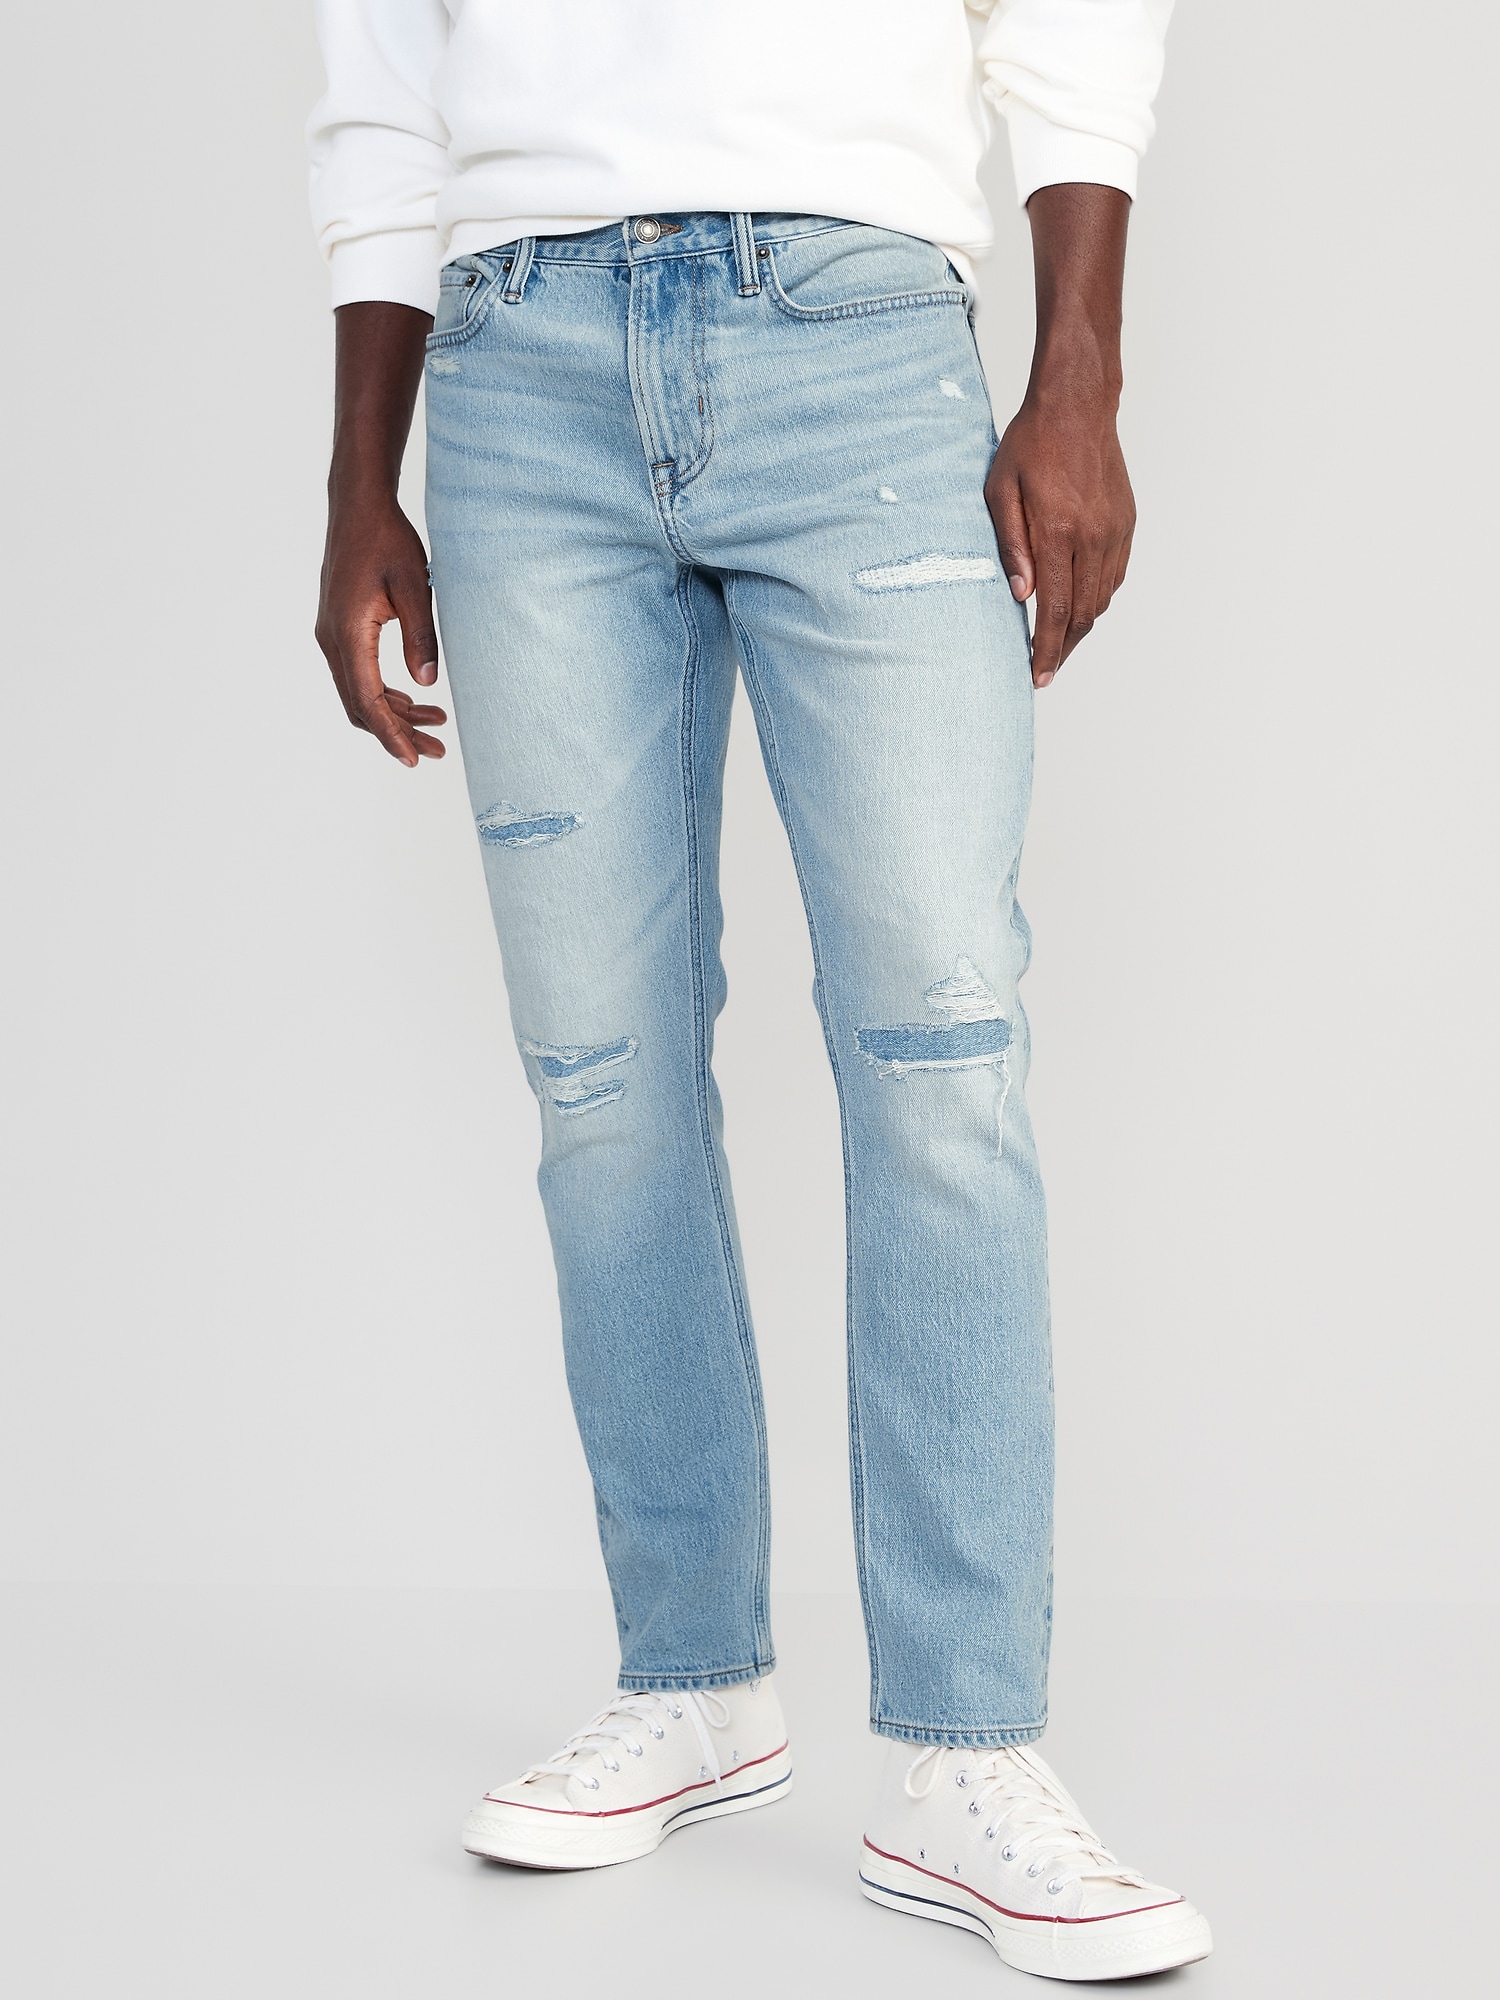 Old Navy Slim Built-In Flex Ripped Jeans for Men blue - 539435012